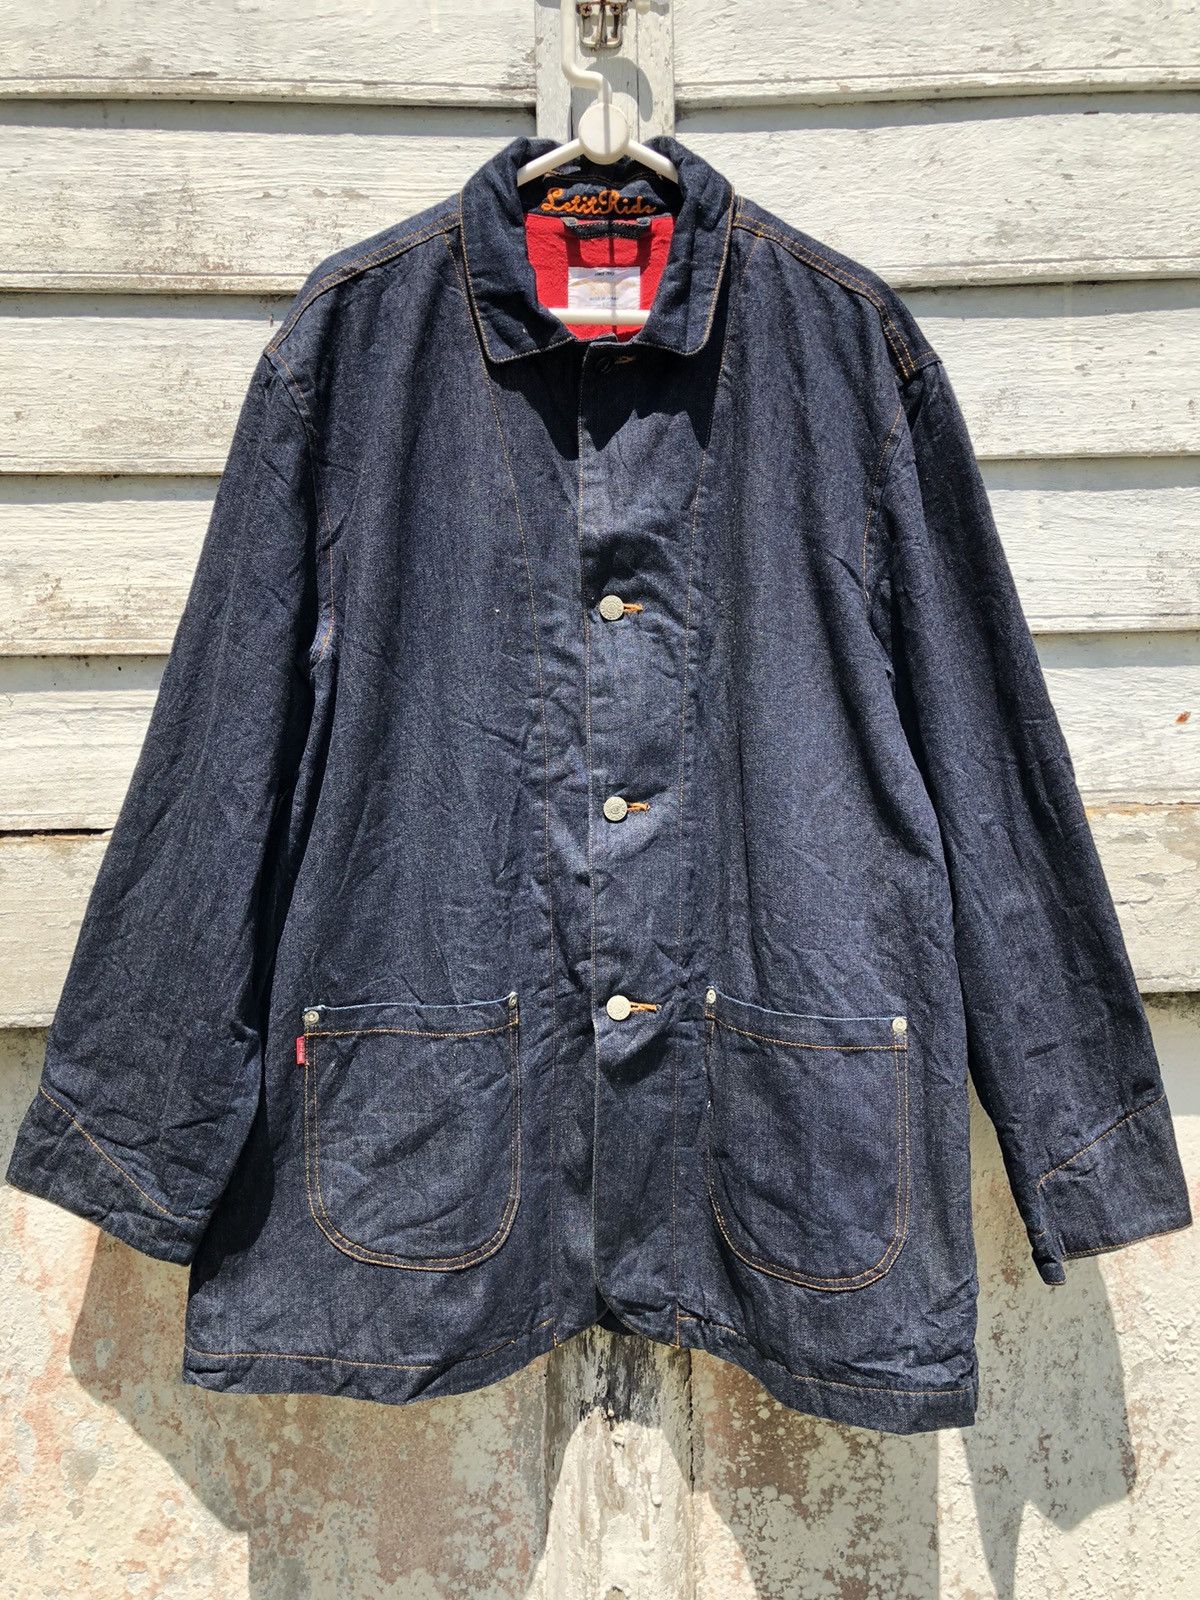 Japanese Brand - Let it Ride 20oz Denim Jacket Cotton Lining - 1